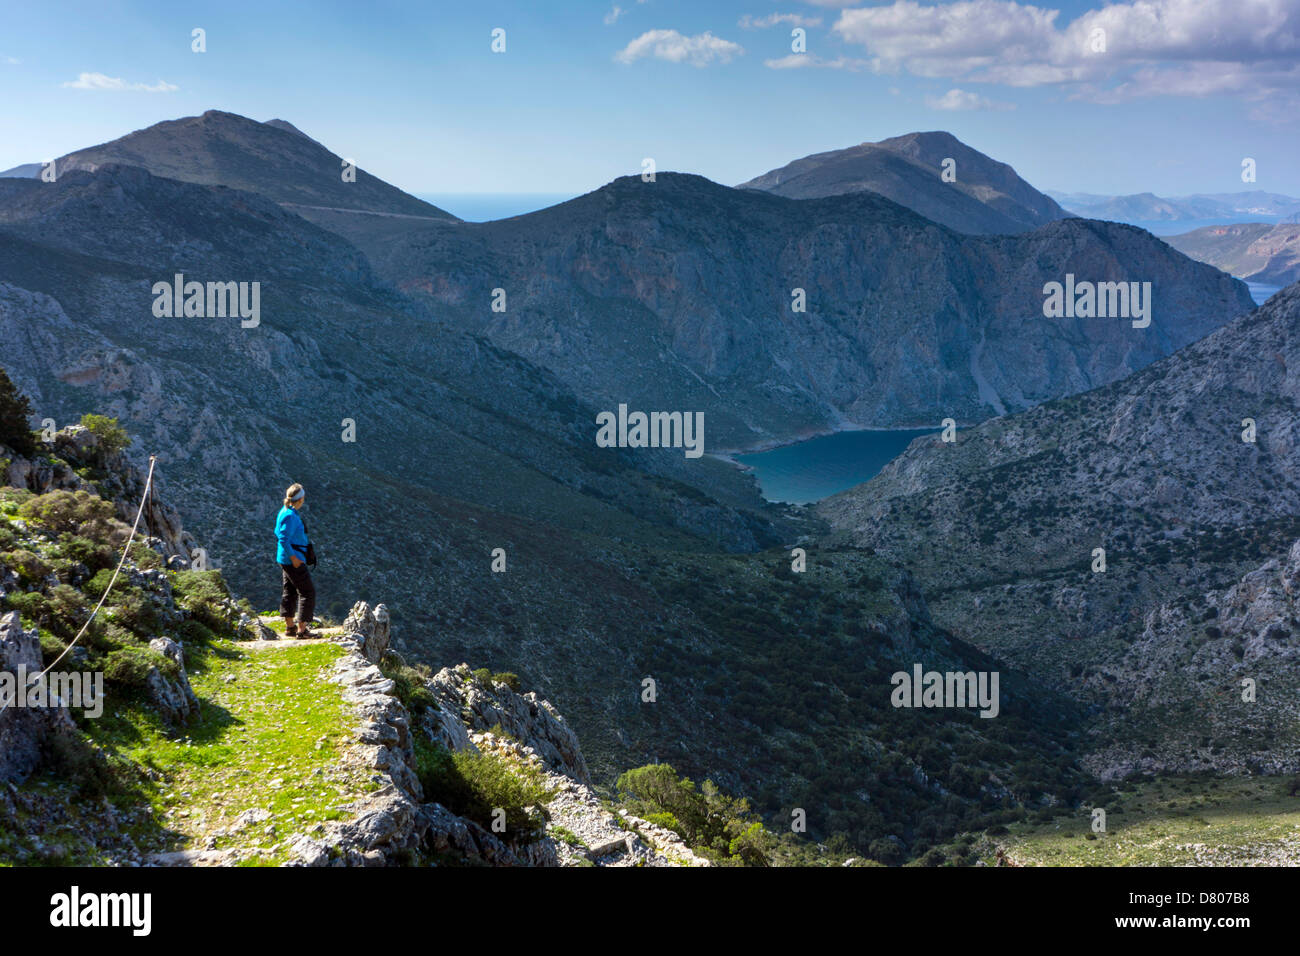 Solitary figure in mountainous landscape, Kalymnos, Greece Stock Photo